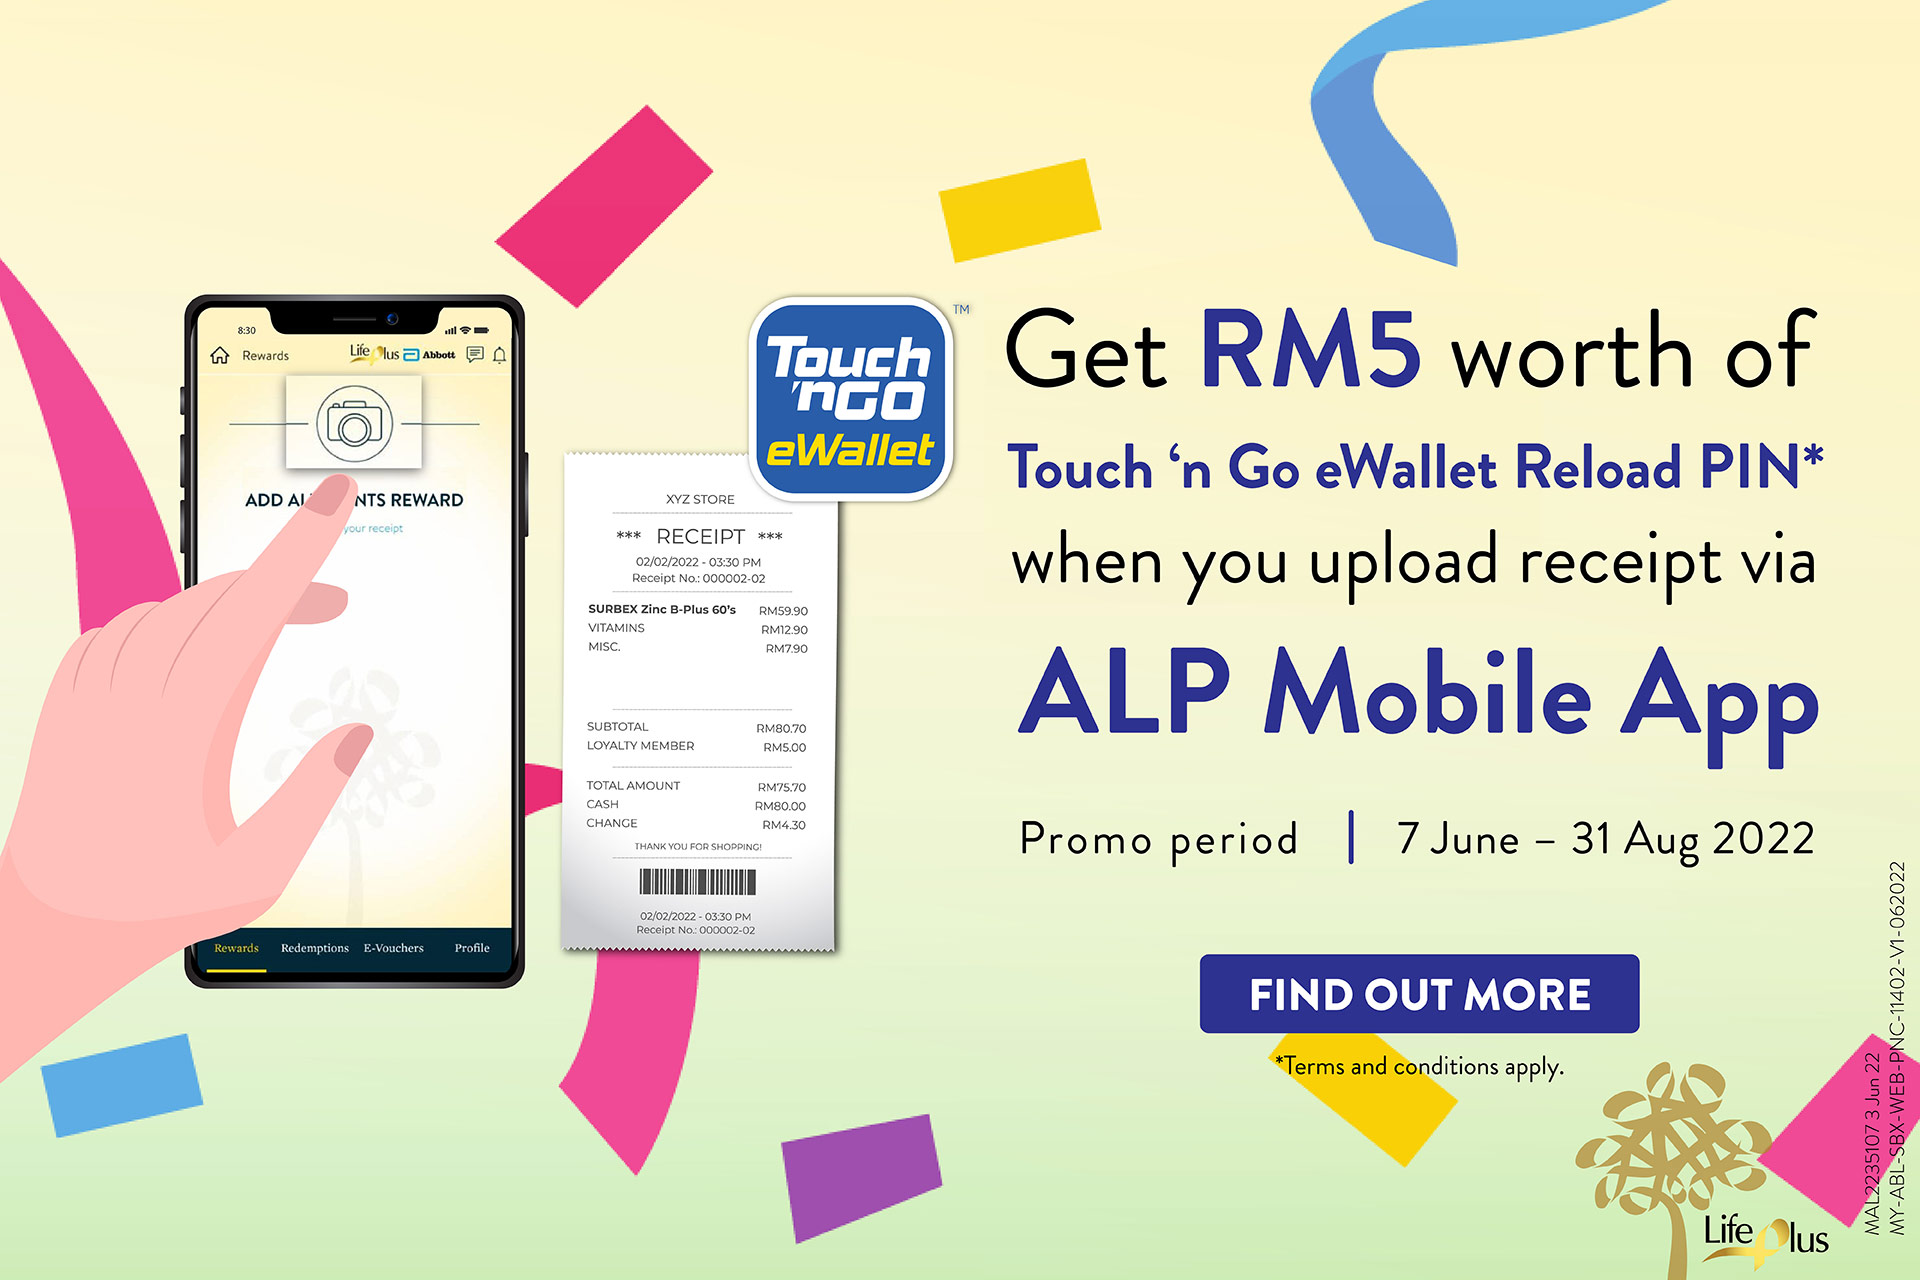 Upload receipt via Mobile App get RM5 TNG